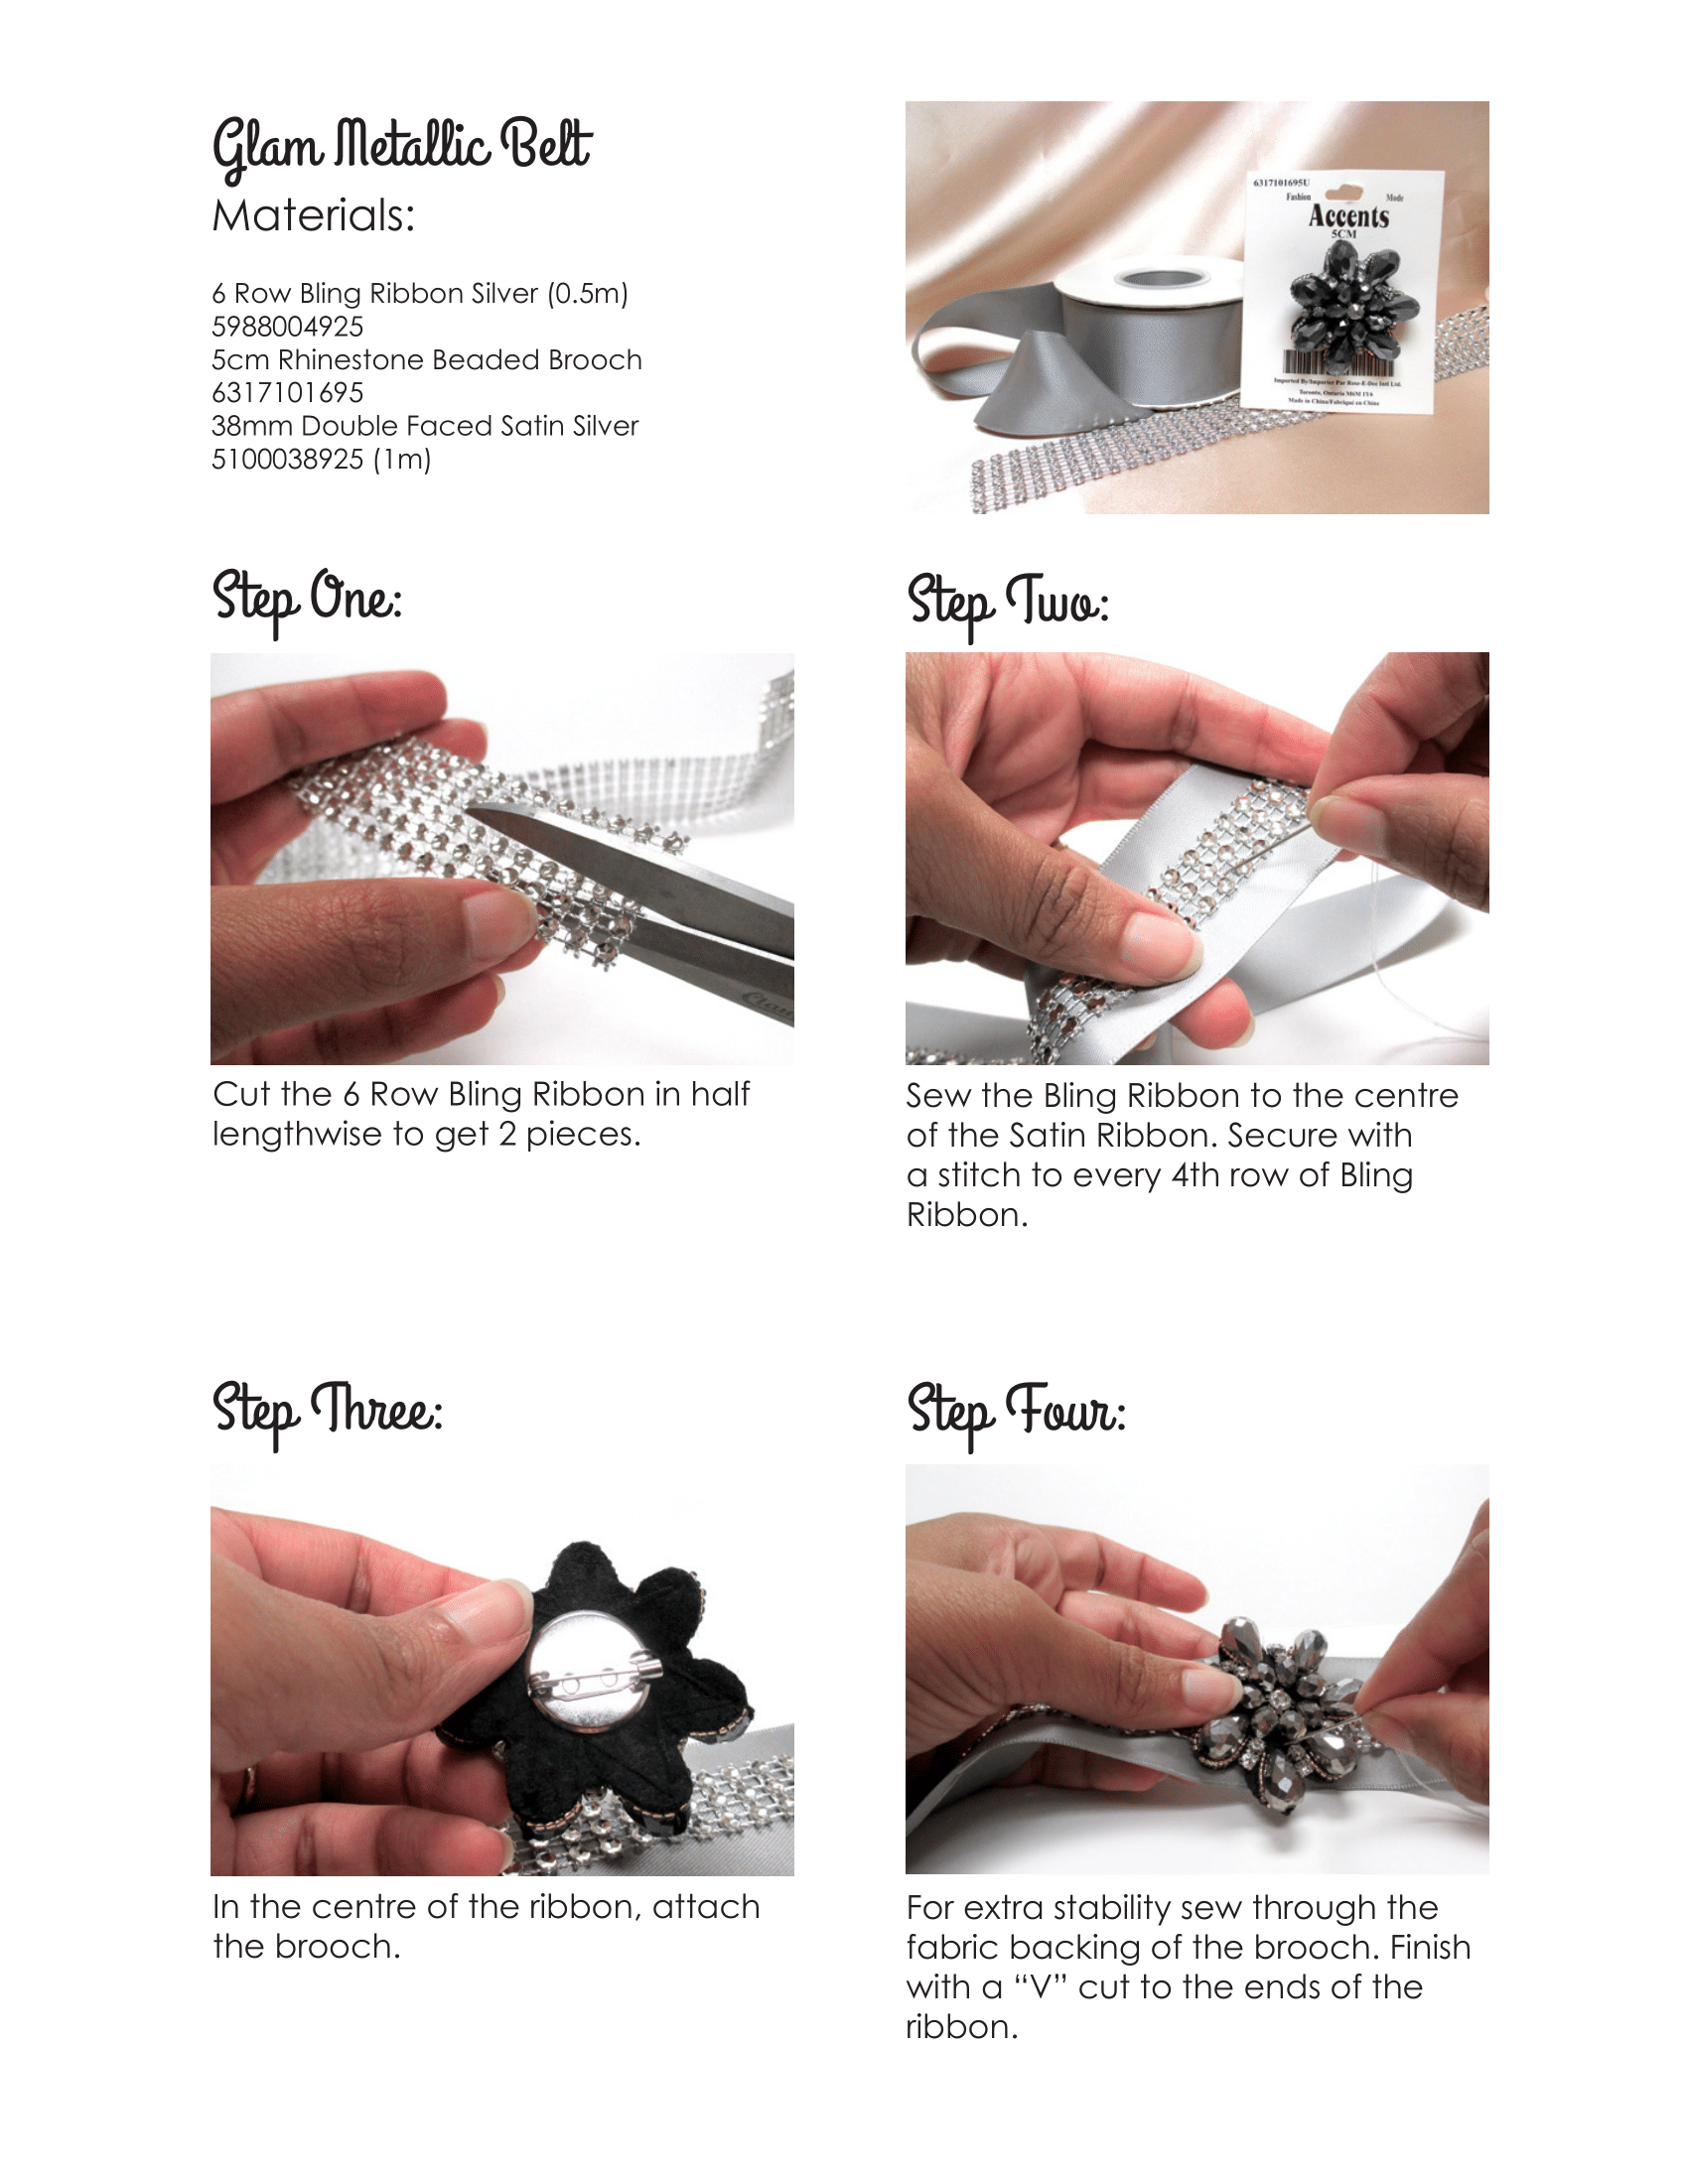 Materials & steps to create glam metallic belt